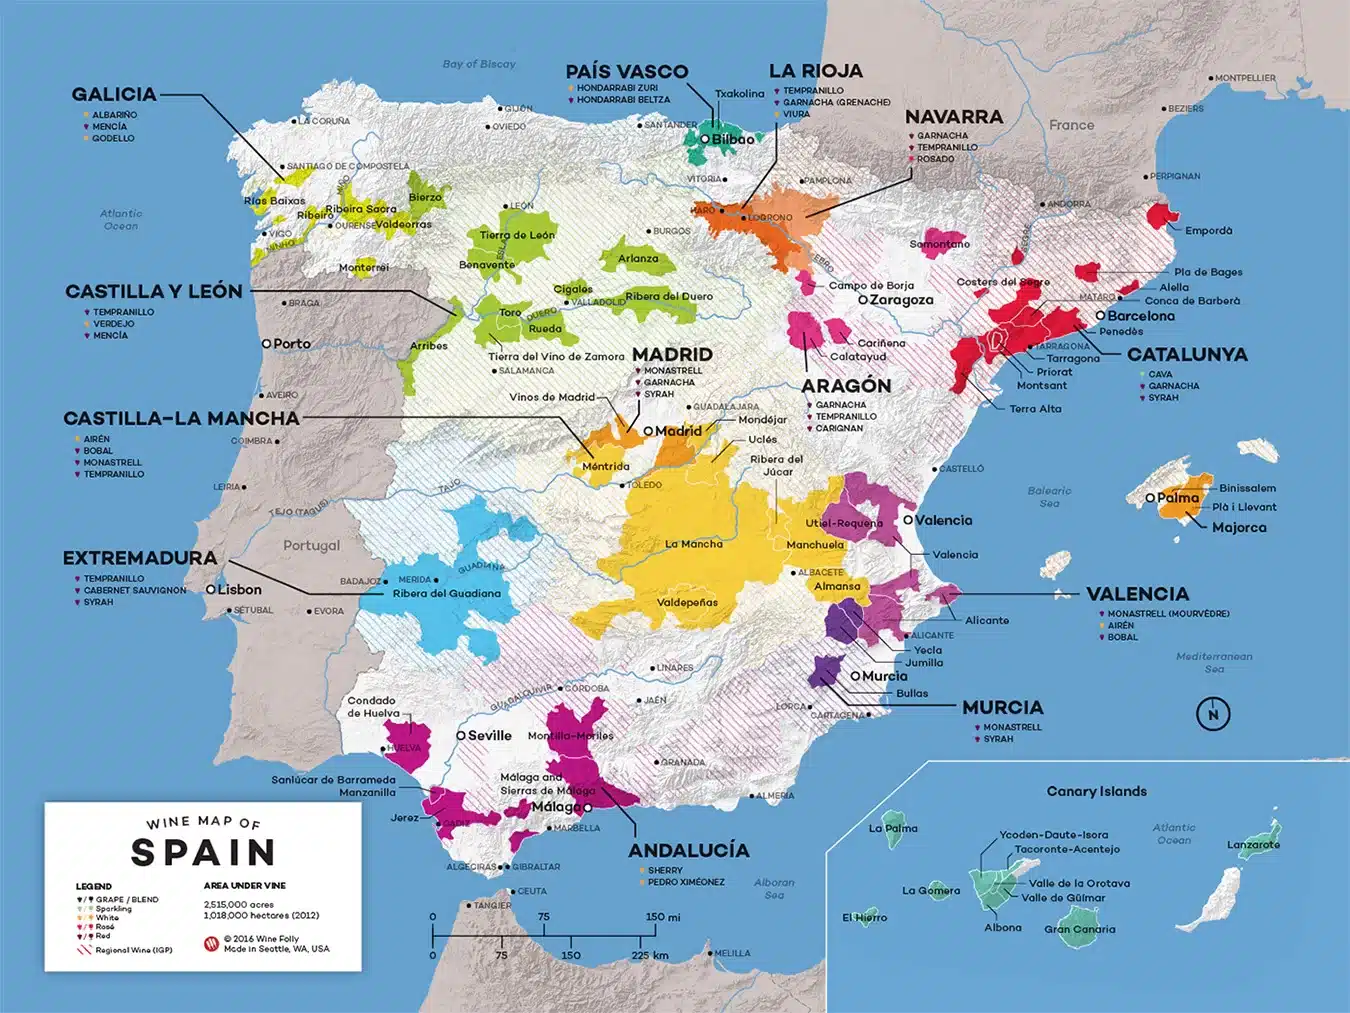 Spain-Wine-Map